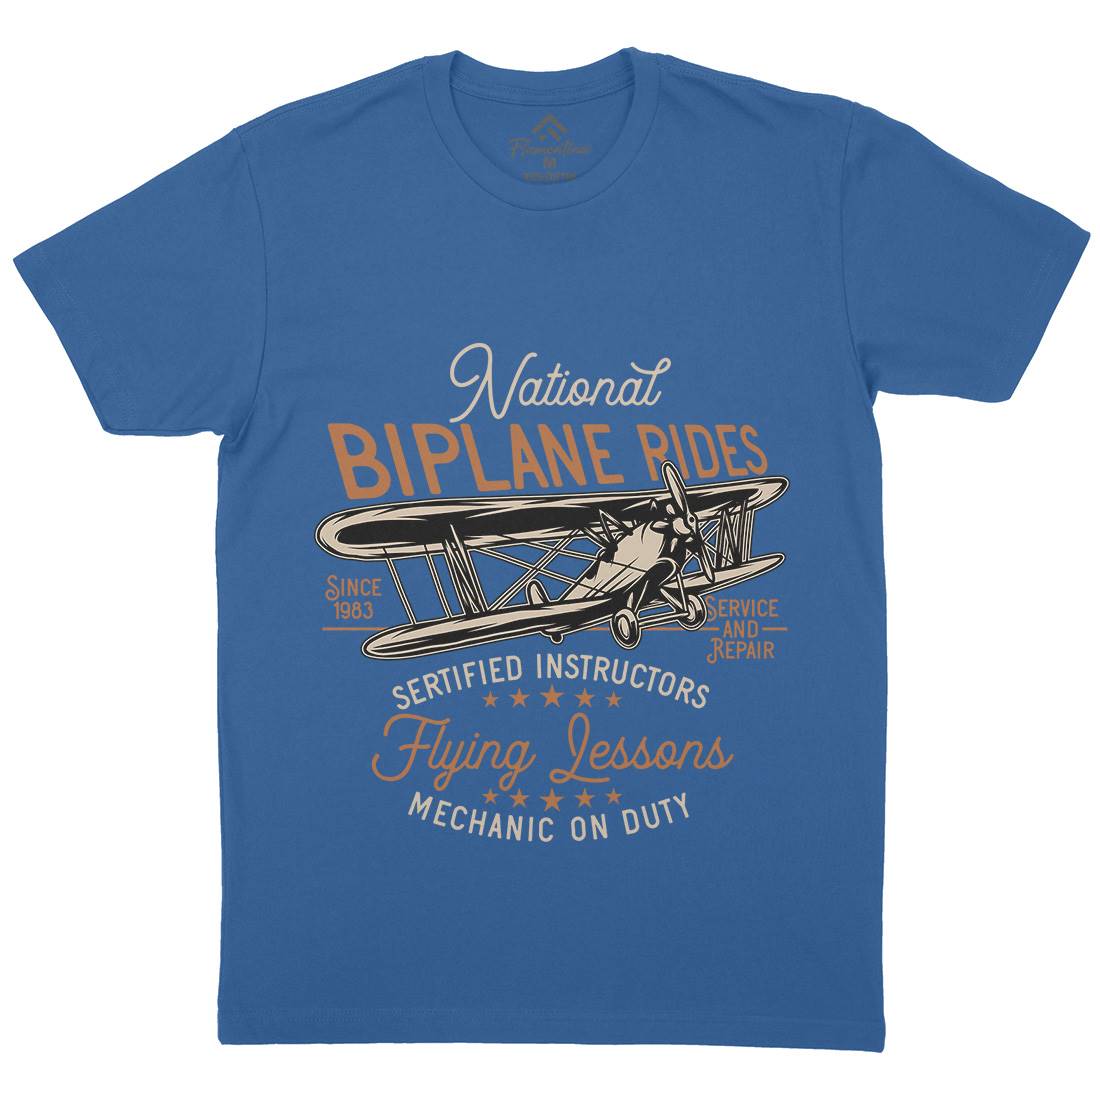 Biplane Rides Mens Organic Crew Neck T-Shirt Vehicles D910